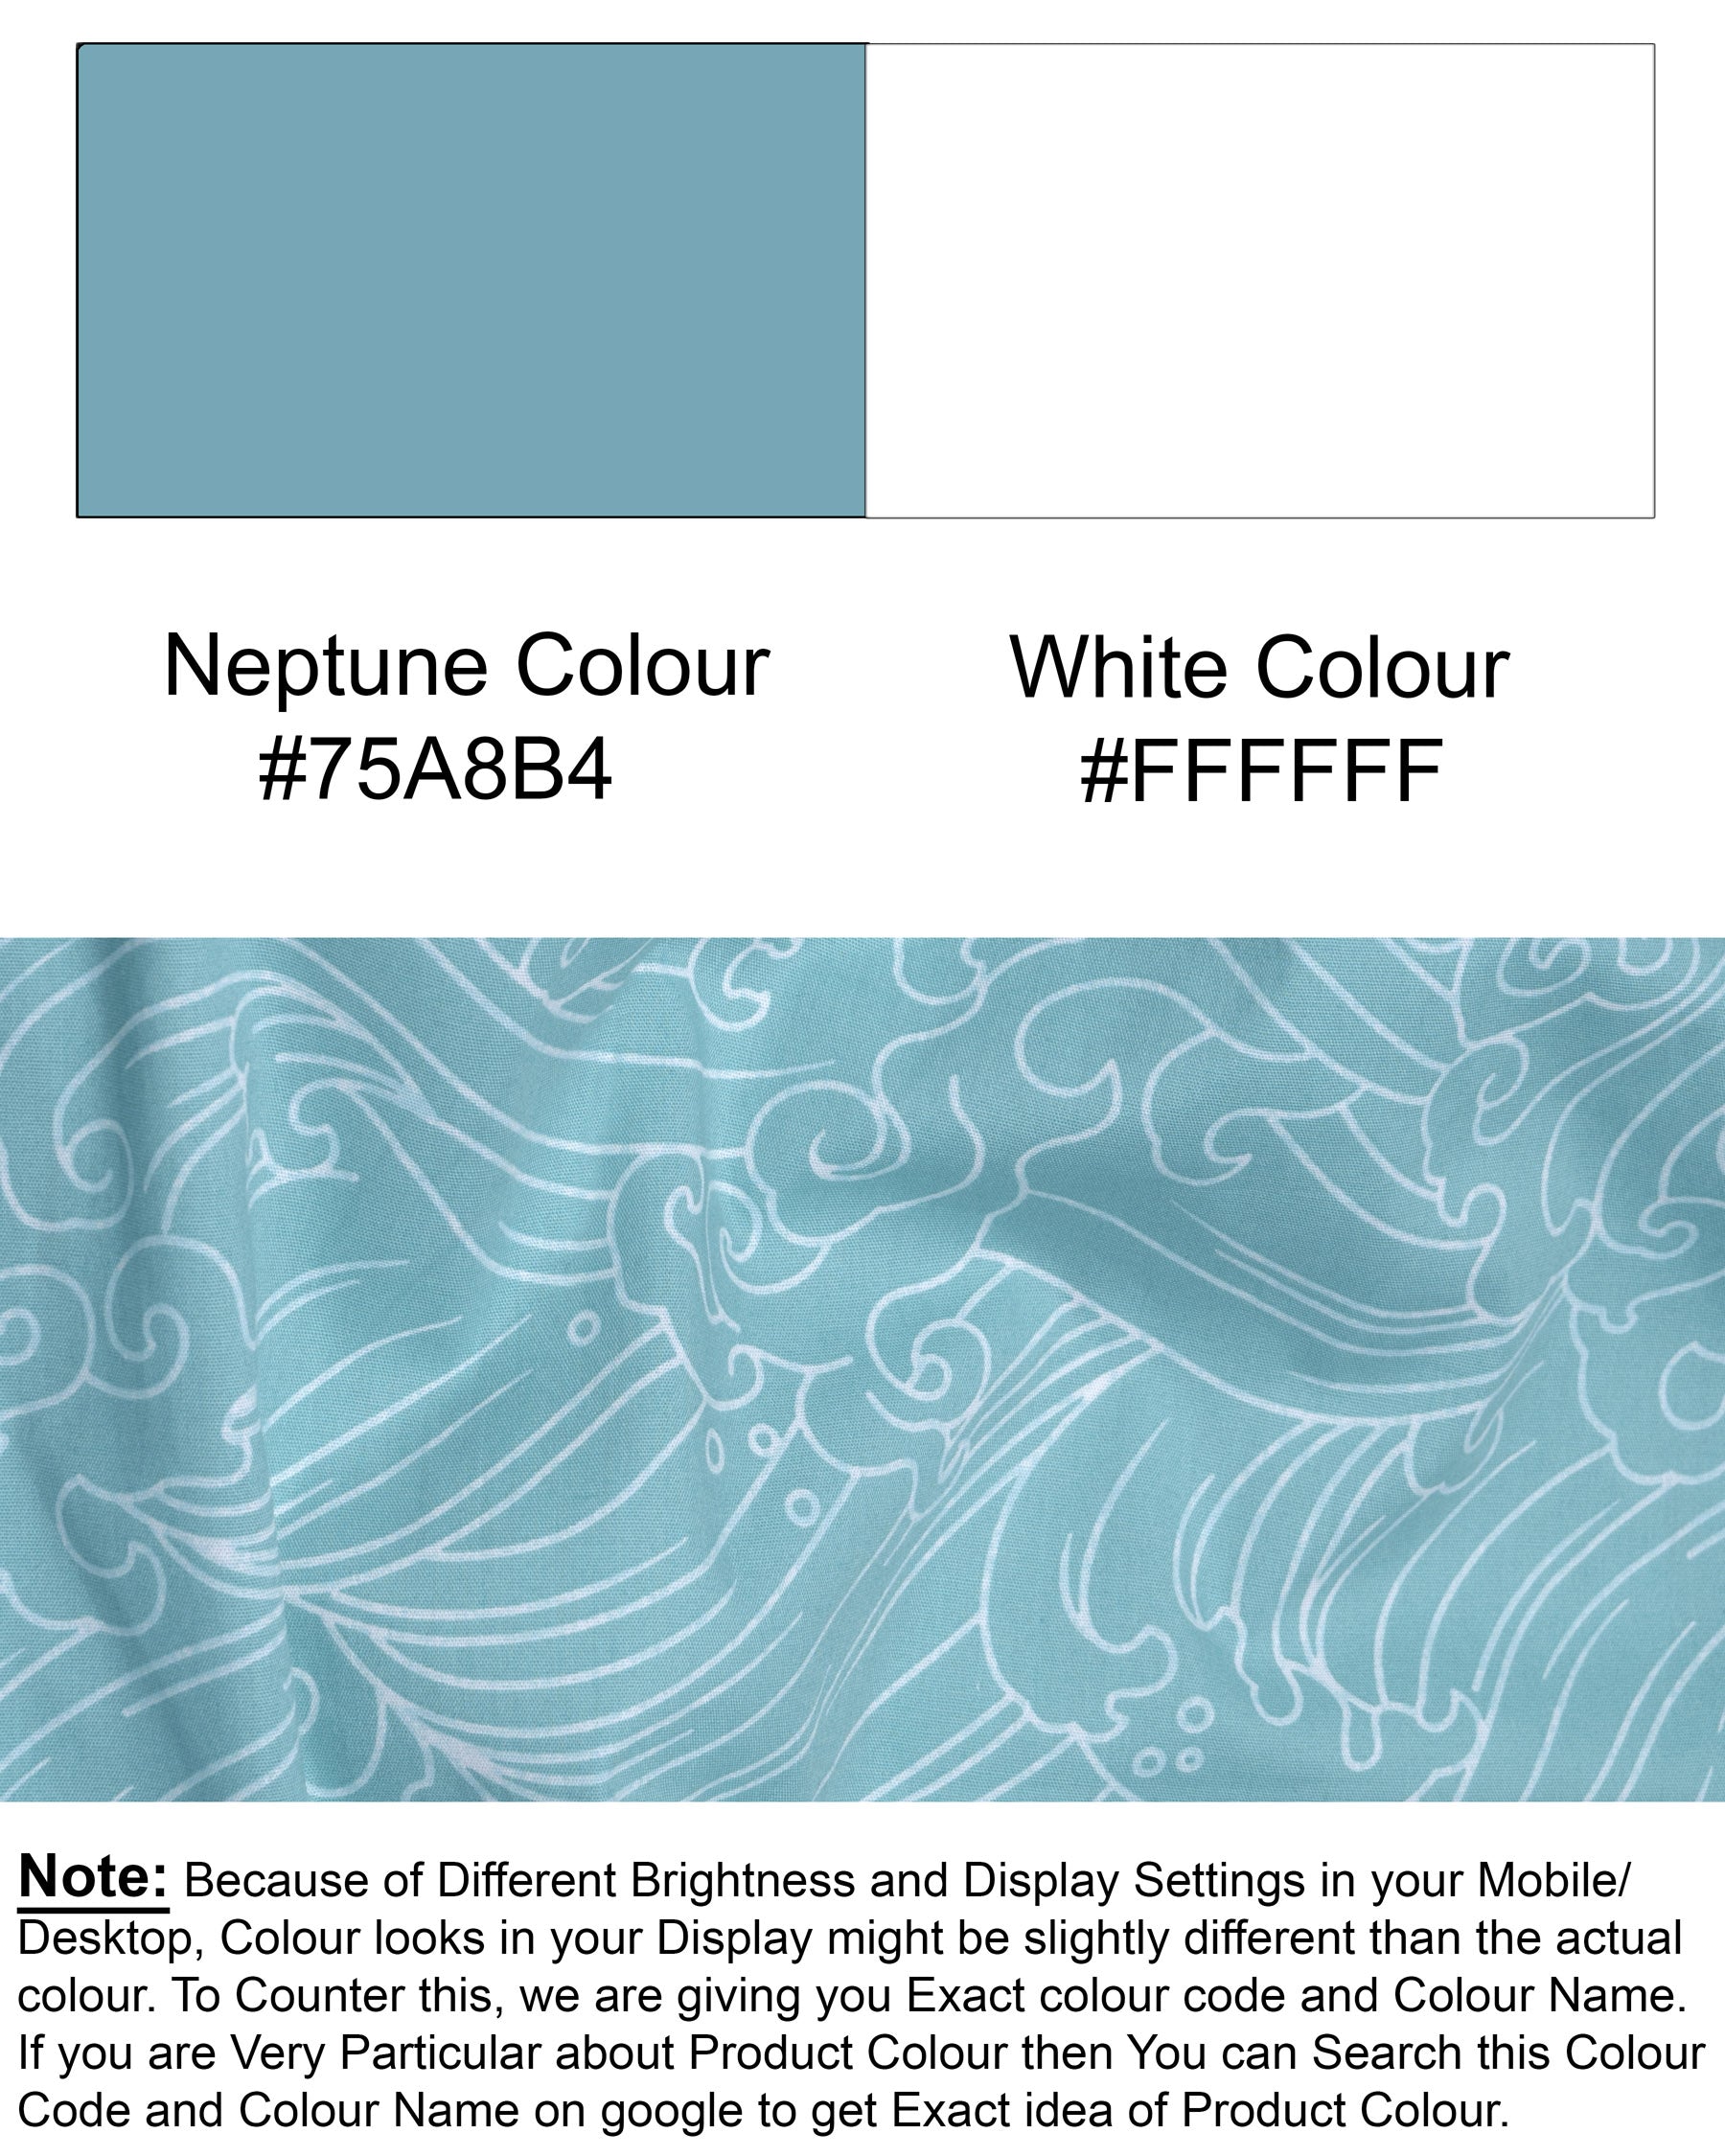 Neptune Sky Blue Waves Printed Premium Cotton Kurta Shirt 5788-KS-38, 5788-KS-H-38, 5788-KS-39, 5788-KS-H-39, 5788-KS-40, 5788-KS-H-40, 5788-KS-42, 5788-KS-H-42, 5788-KS-44, 5788-KS-H-44, 5788-KS-46, 5788-KS-H-46, 5788-KS-48, 5788-KS-H-48, 5788-KS-50, 5788-KS-H-50, 5788-KS-52, 5788-KS-H-52